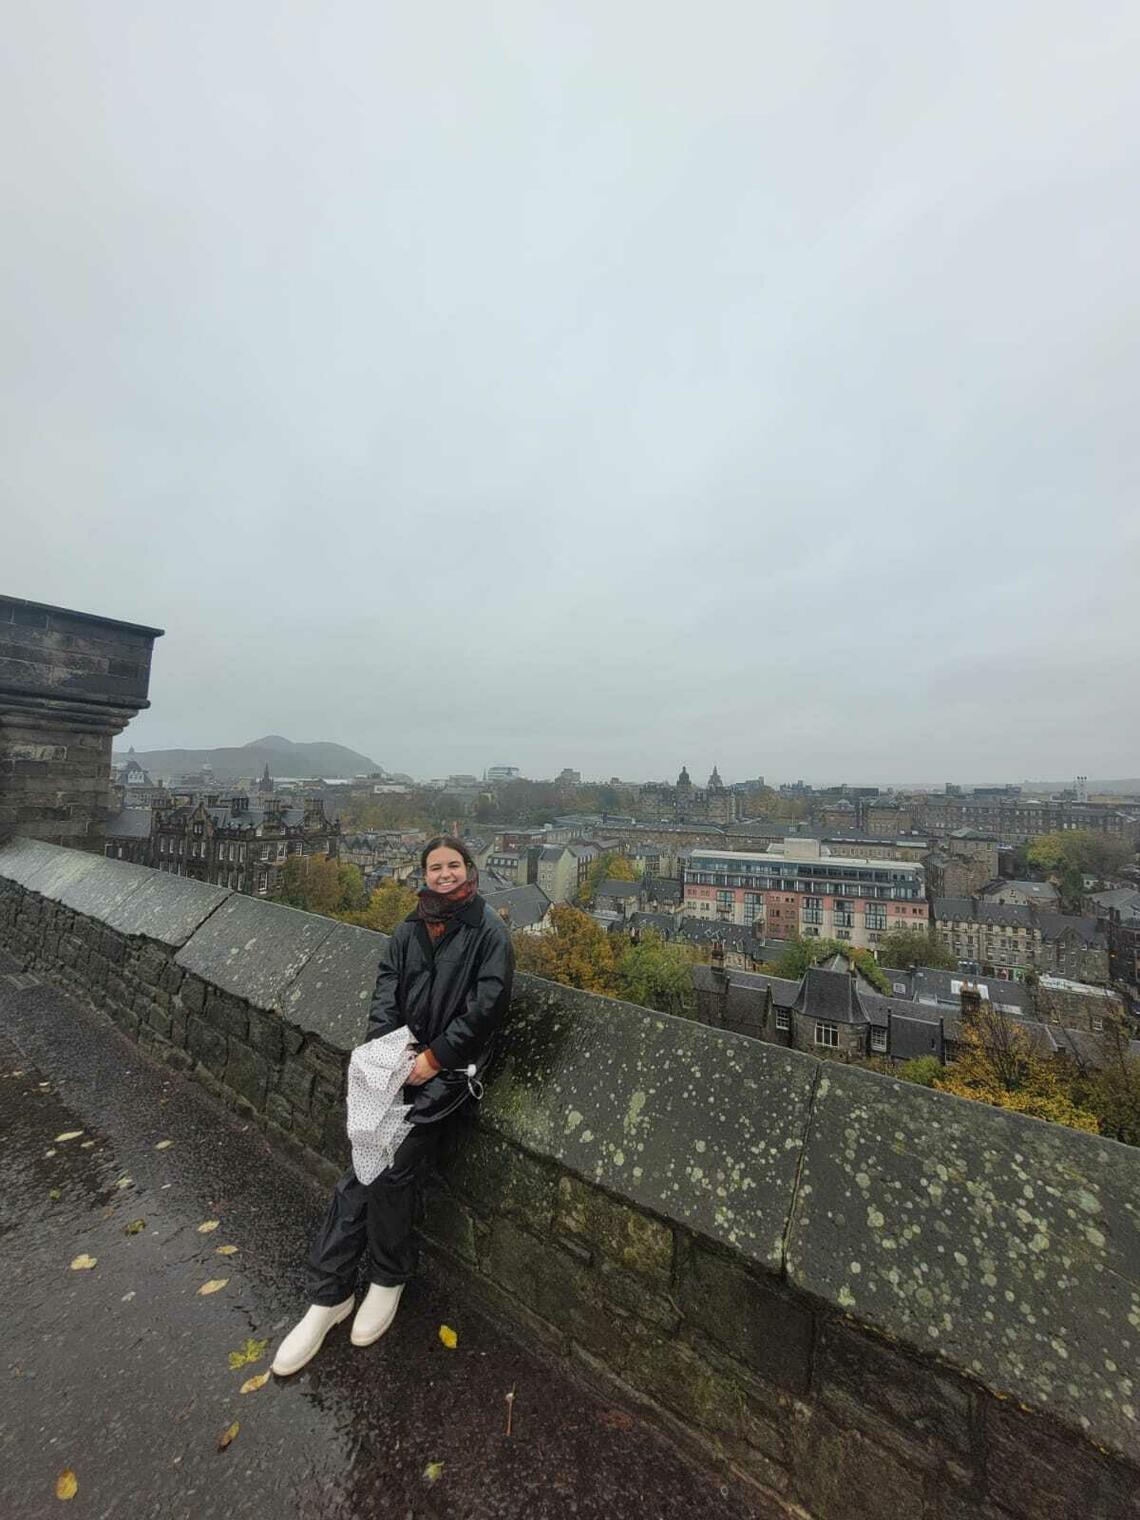 Me by the Edinburgh Castle